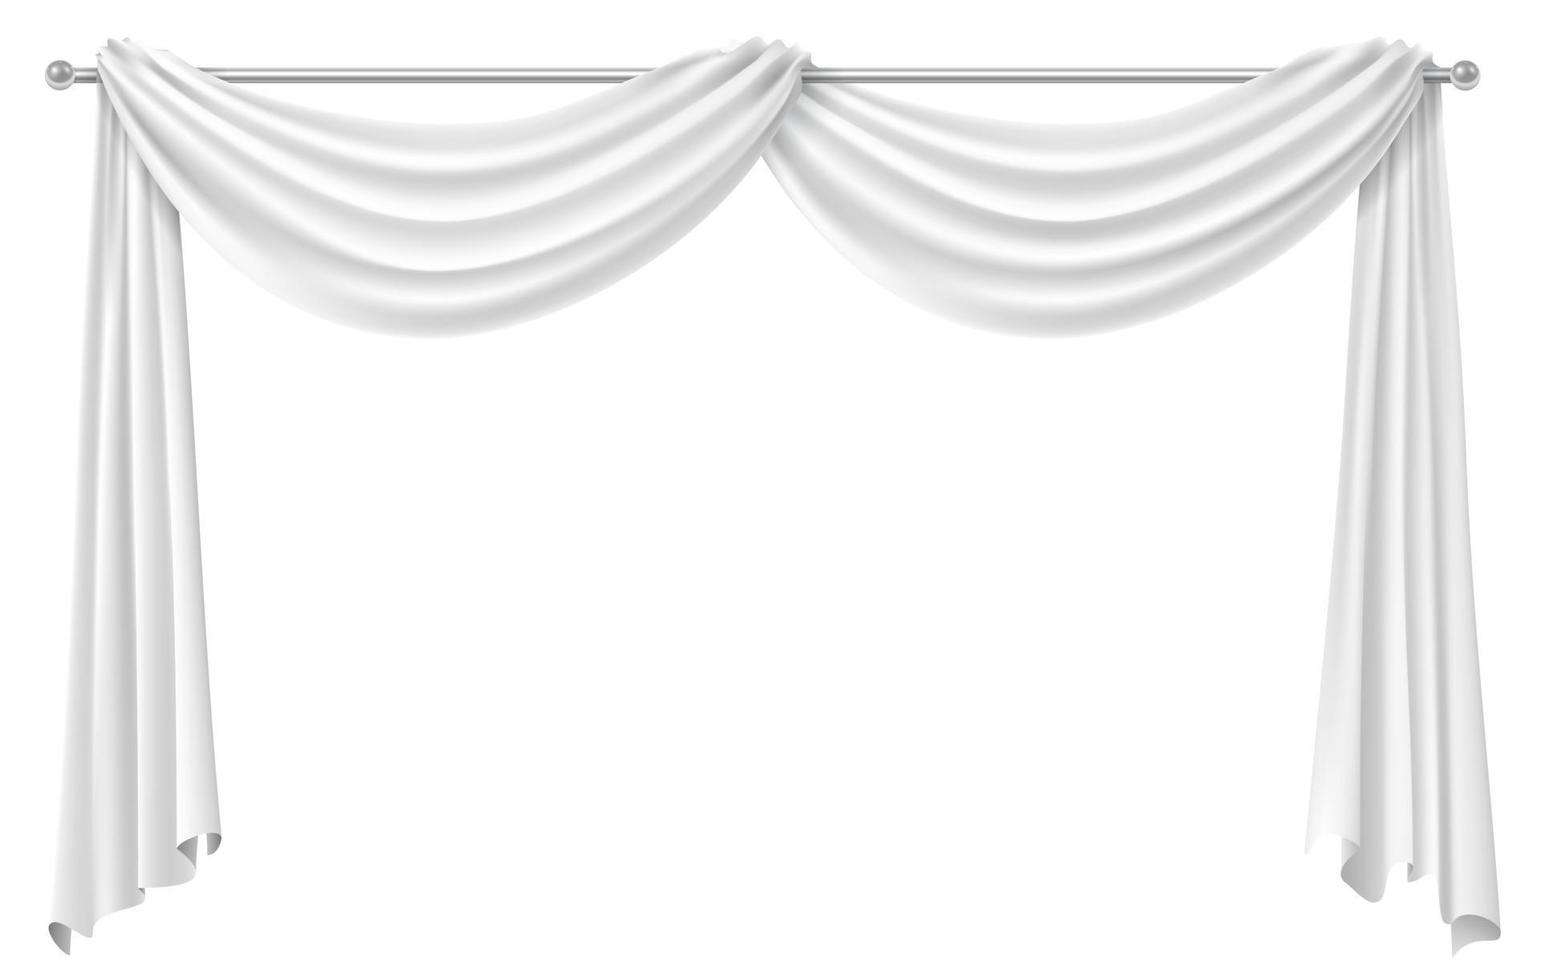 Curtain drapery on white vector